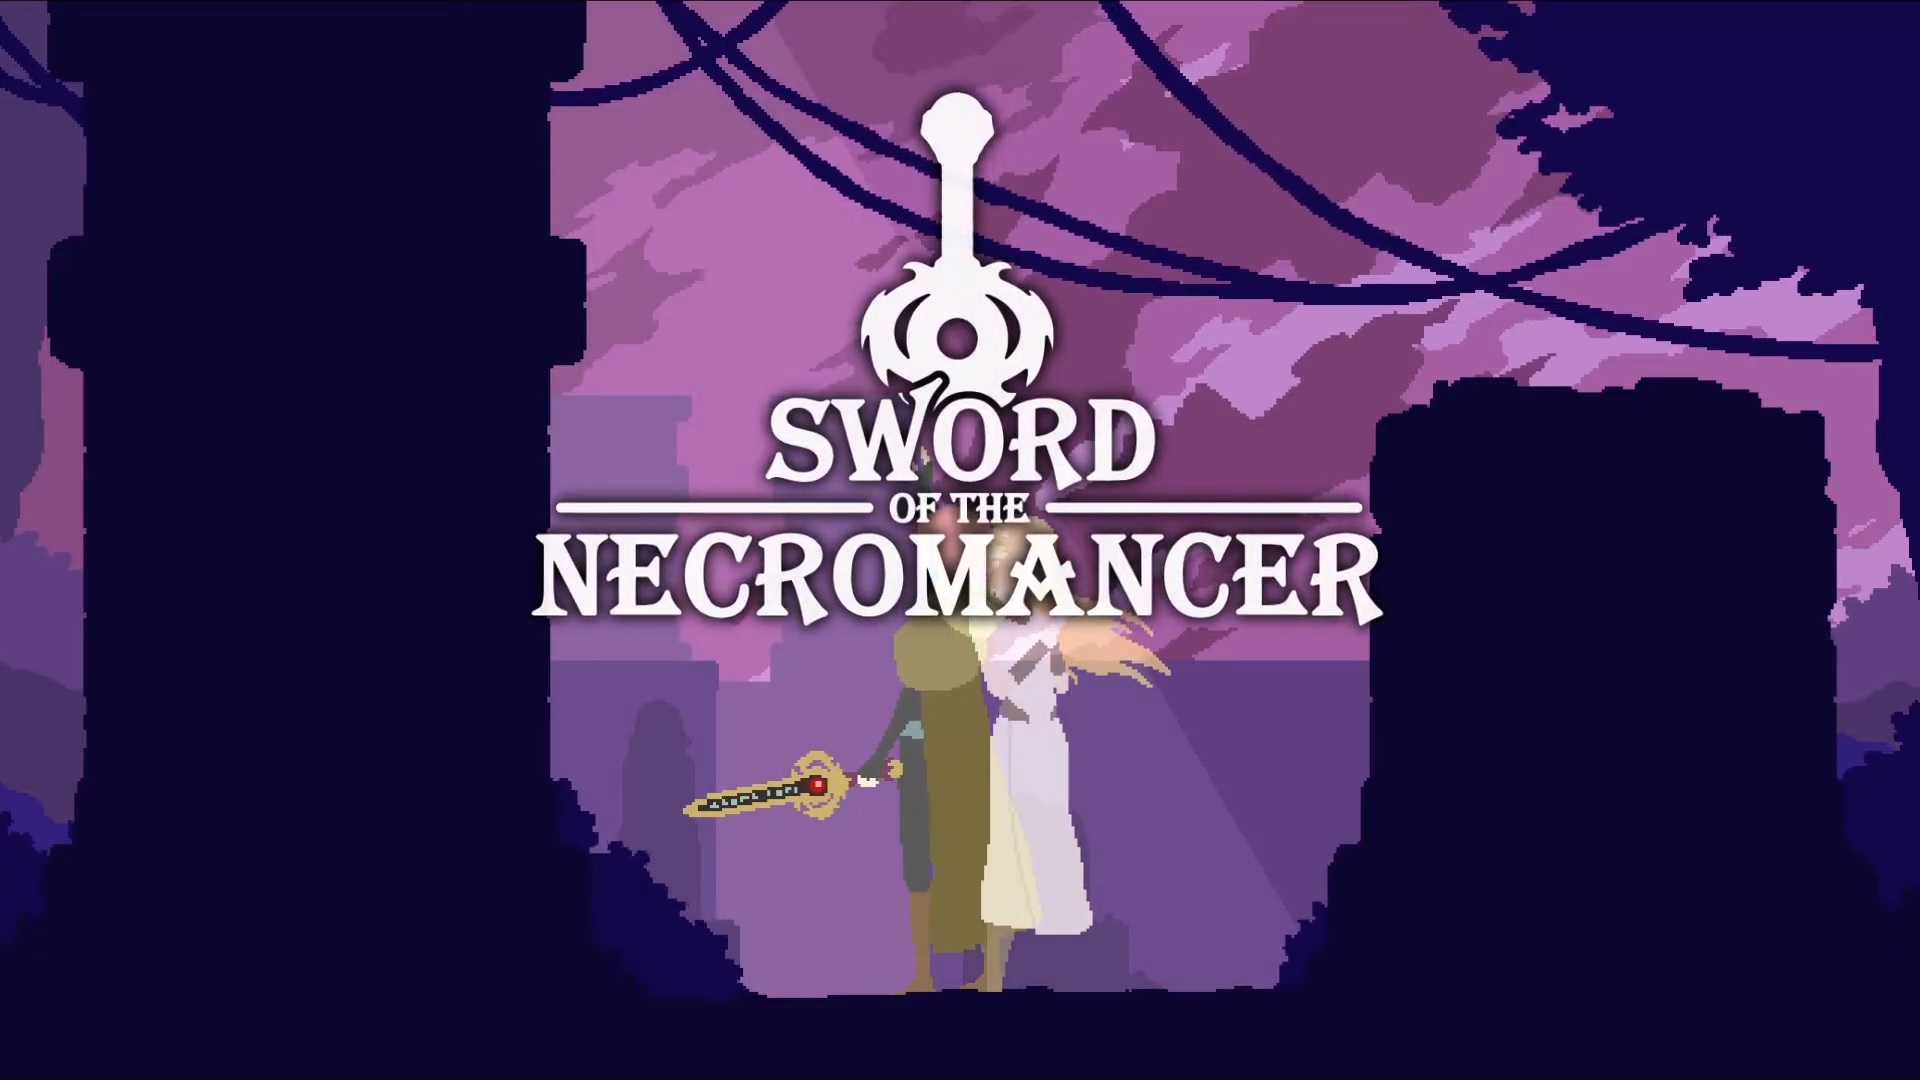 download Sword of the Necromancer